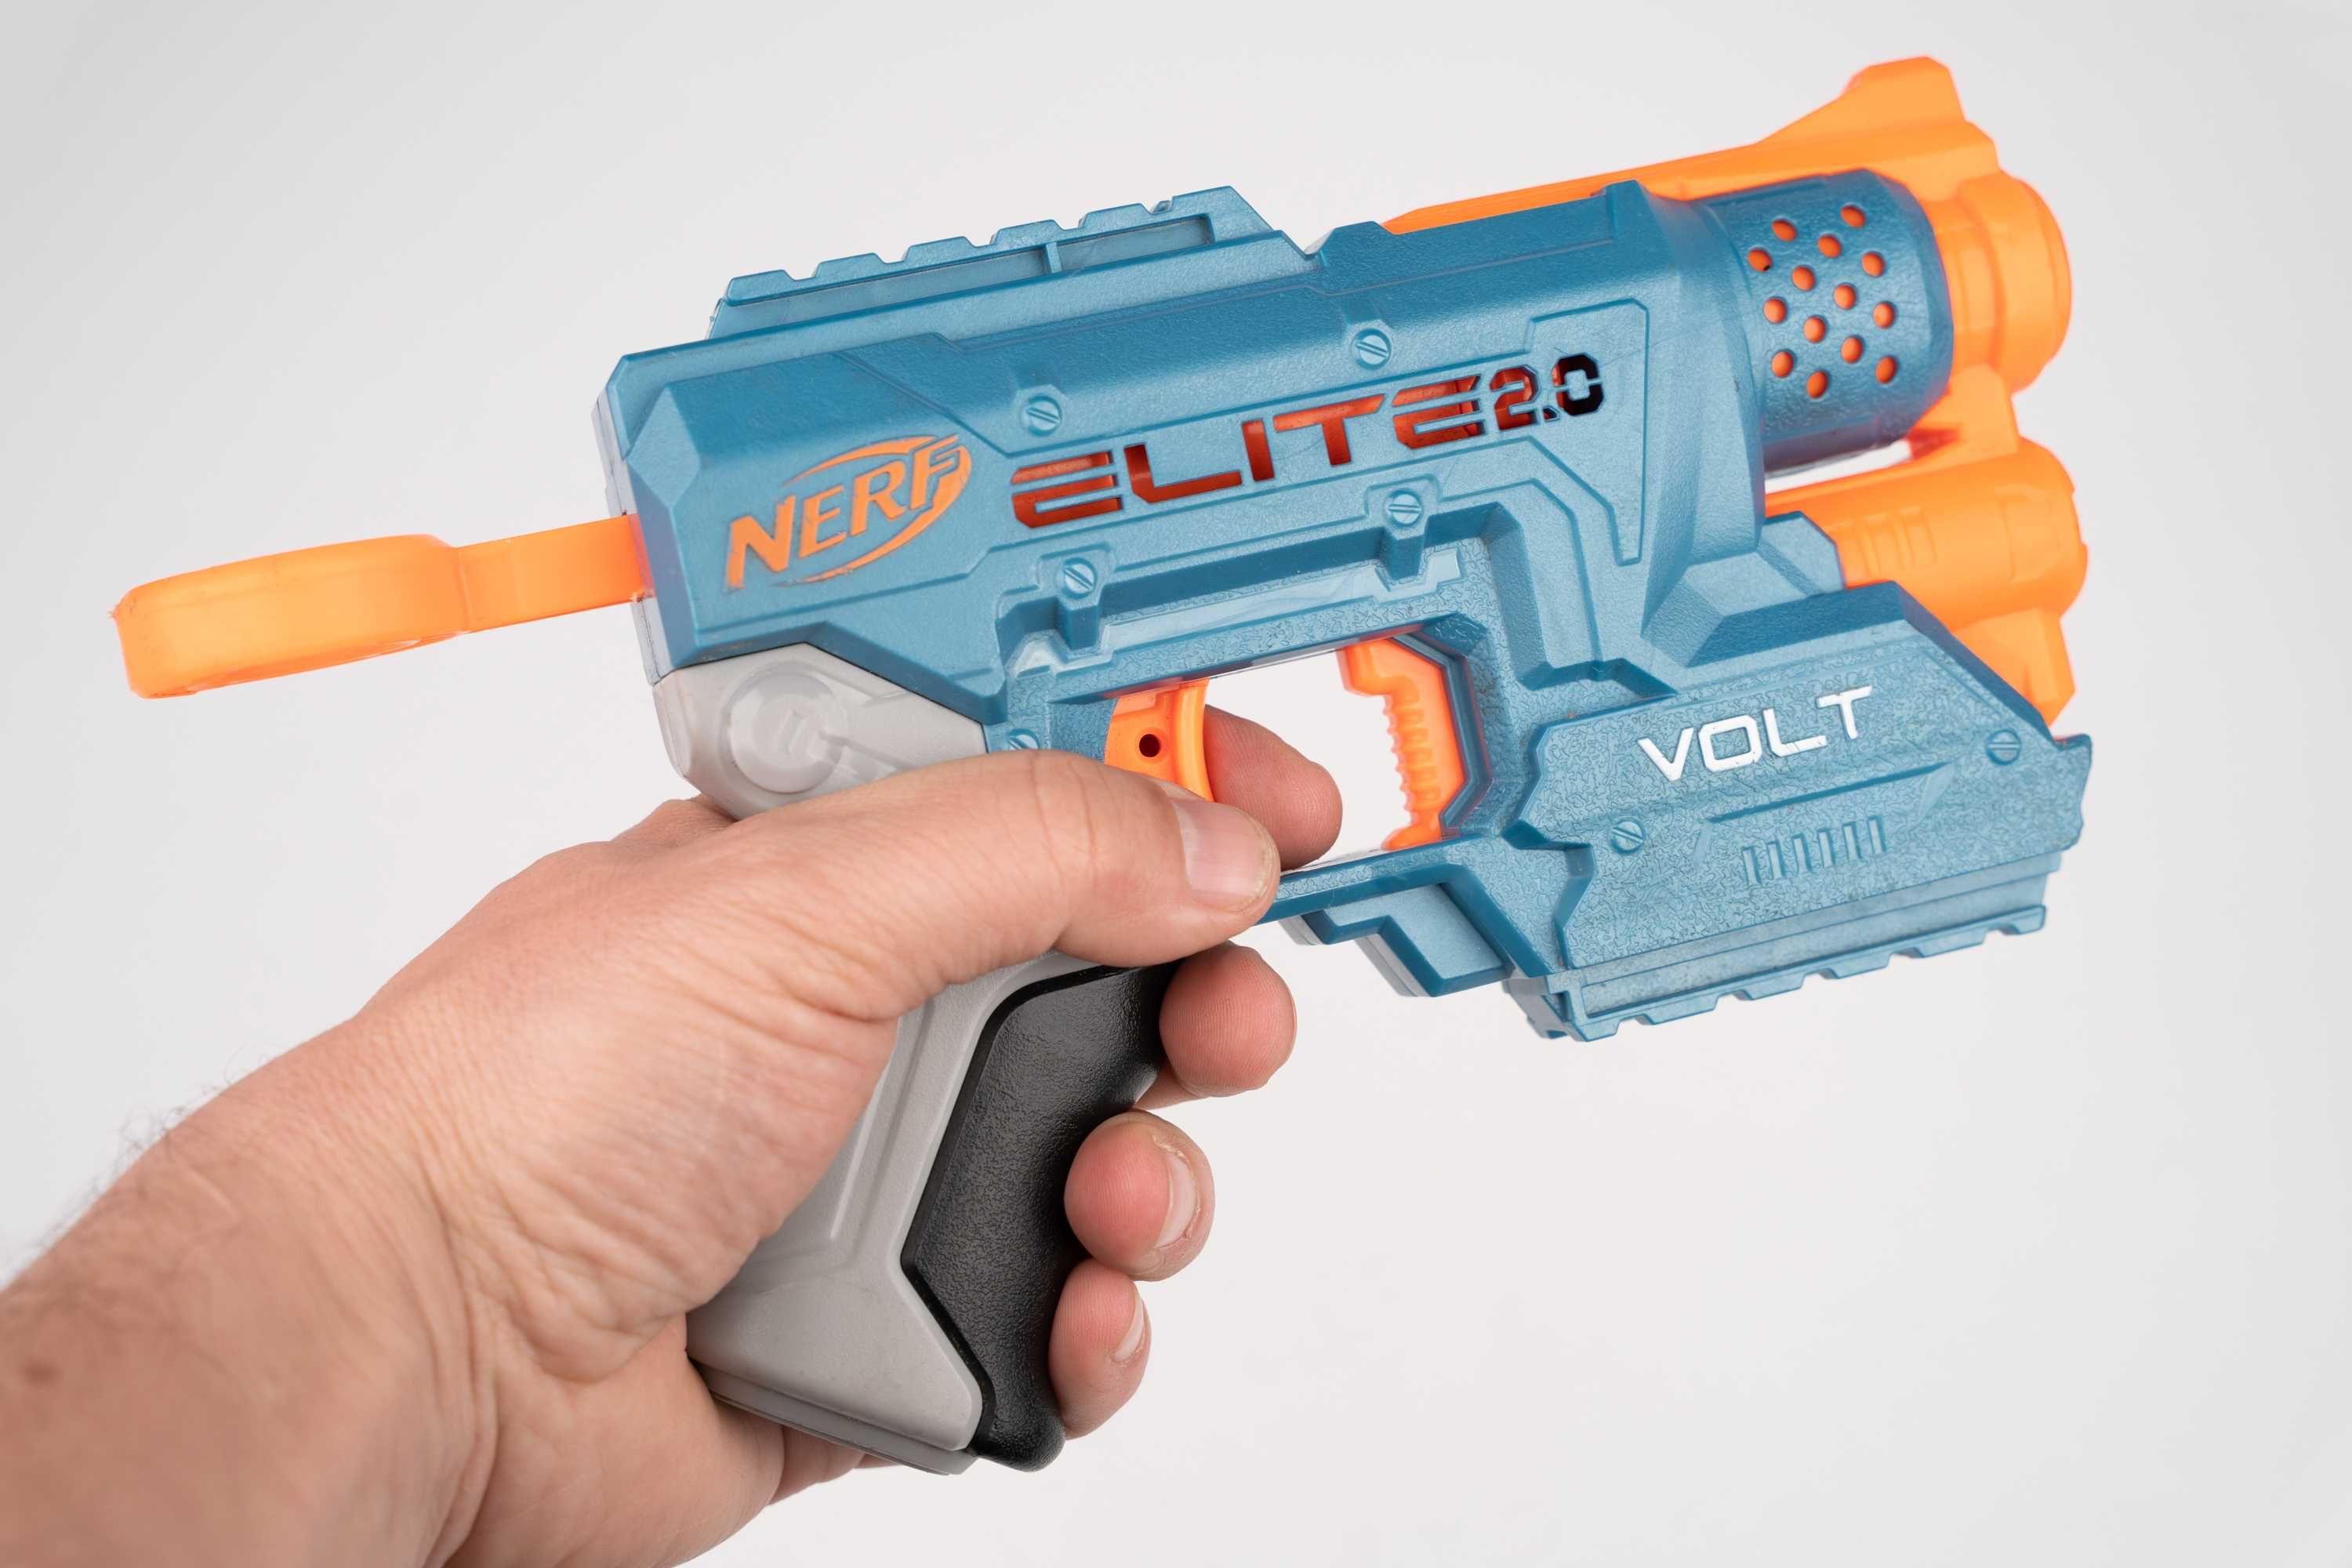 Дитячий пістолет, бластер Nerf Elite 2.0 Volt з лазерним прицілом